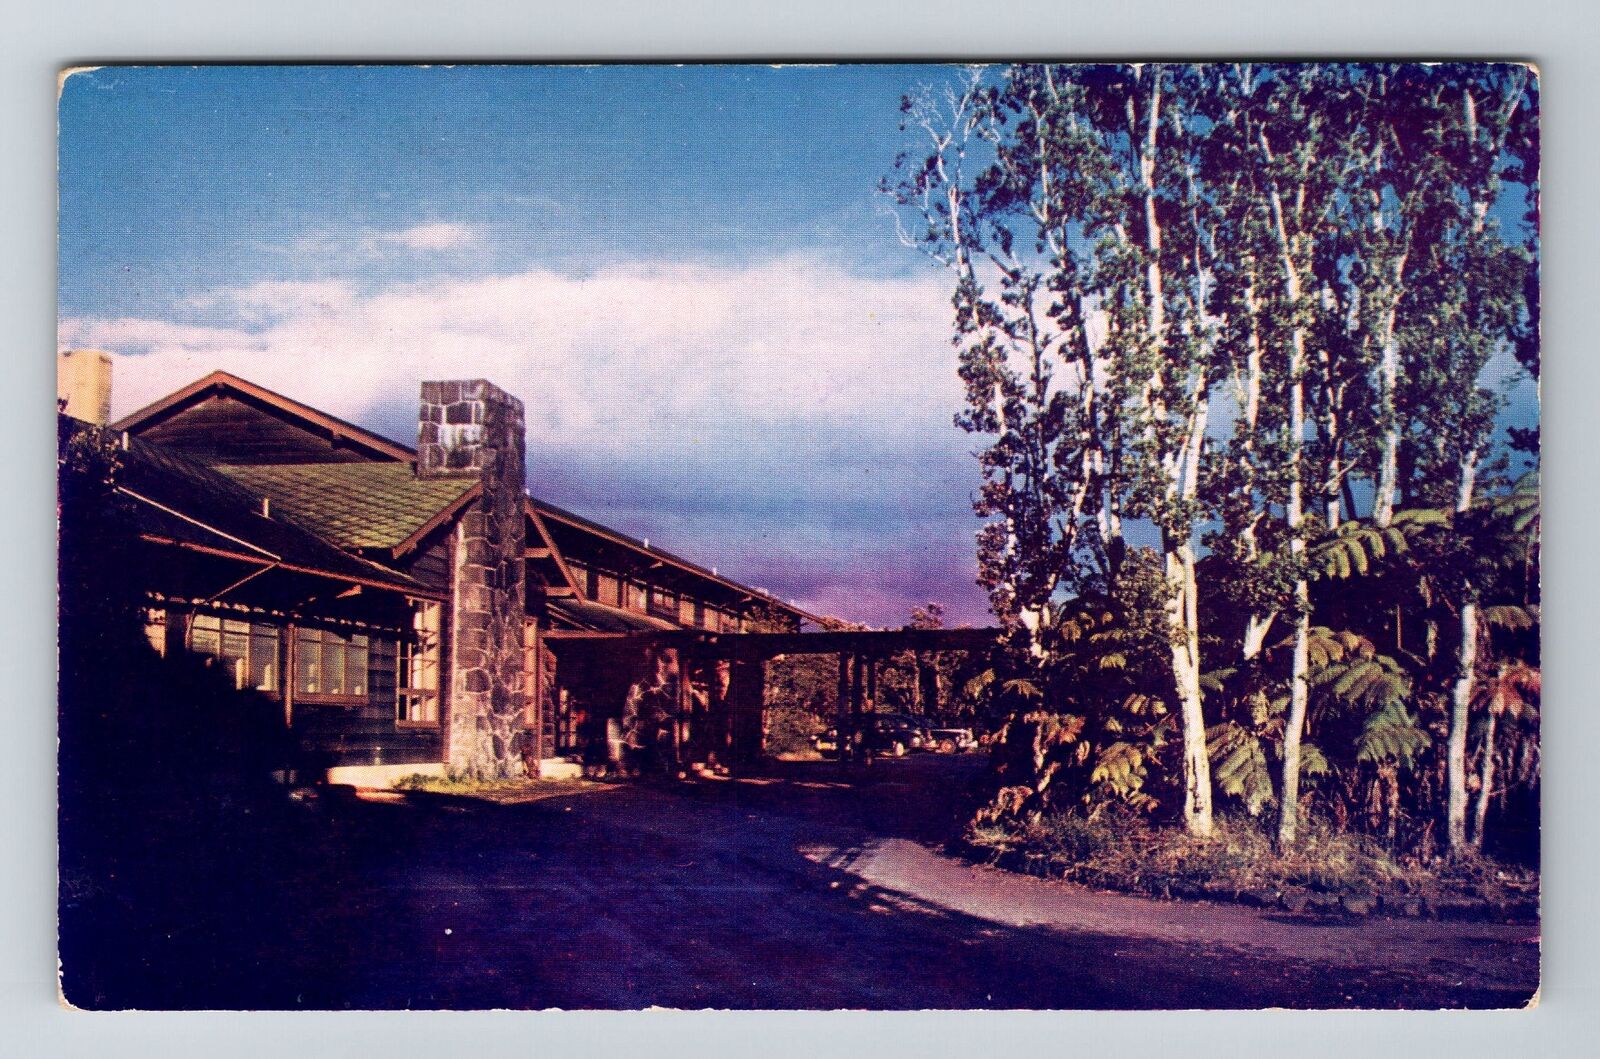 HI-Hawaii National Park Volcano House Vintage Souvenir Postcard